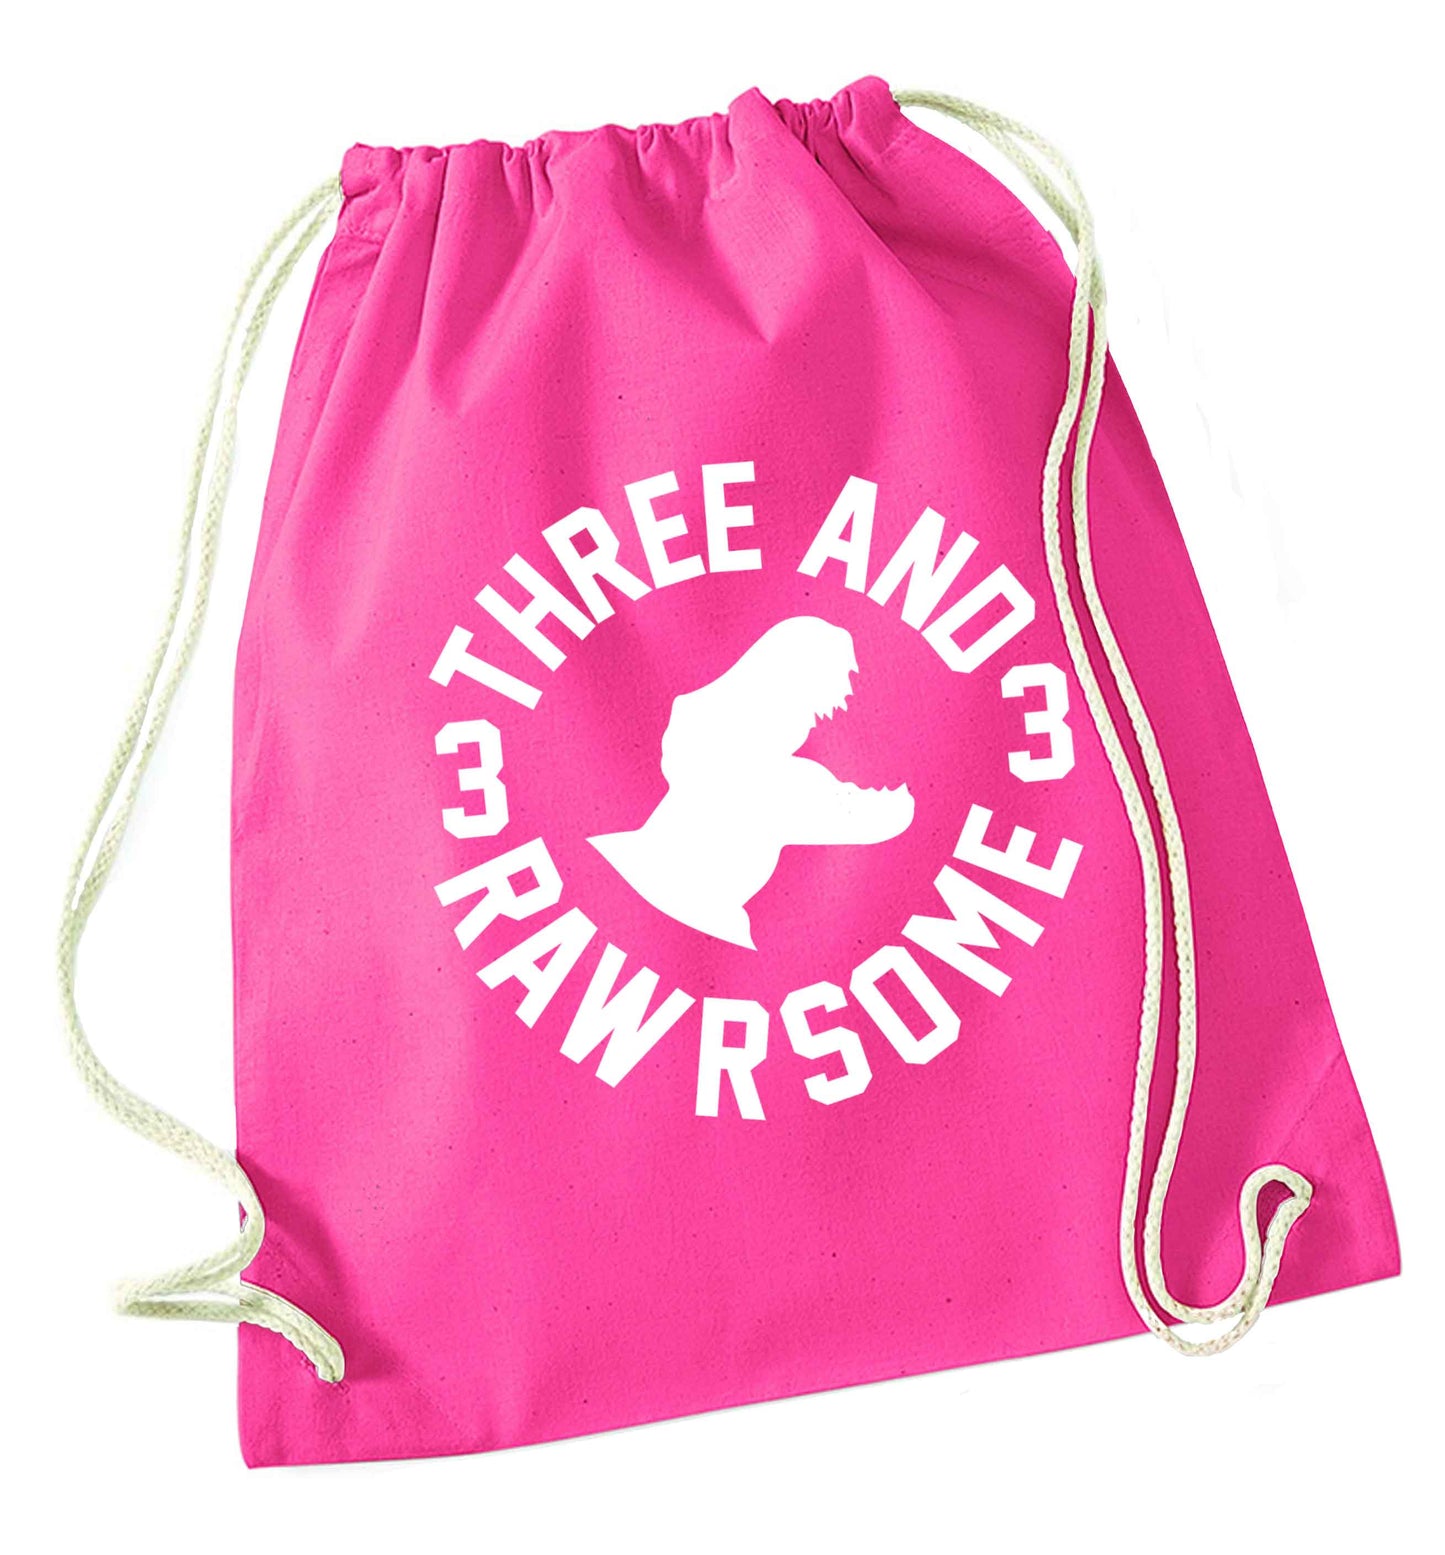 Three and rawrsome pink drawstring bag